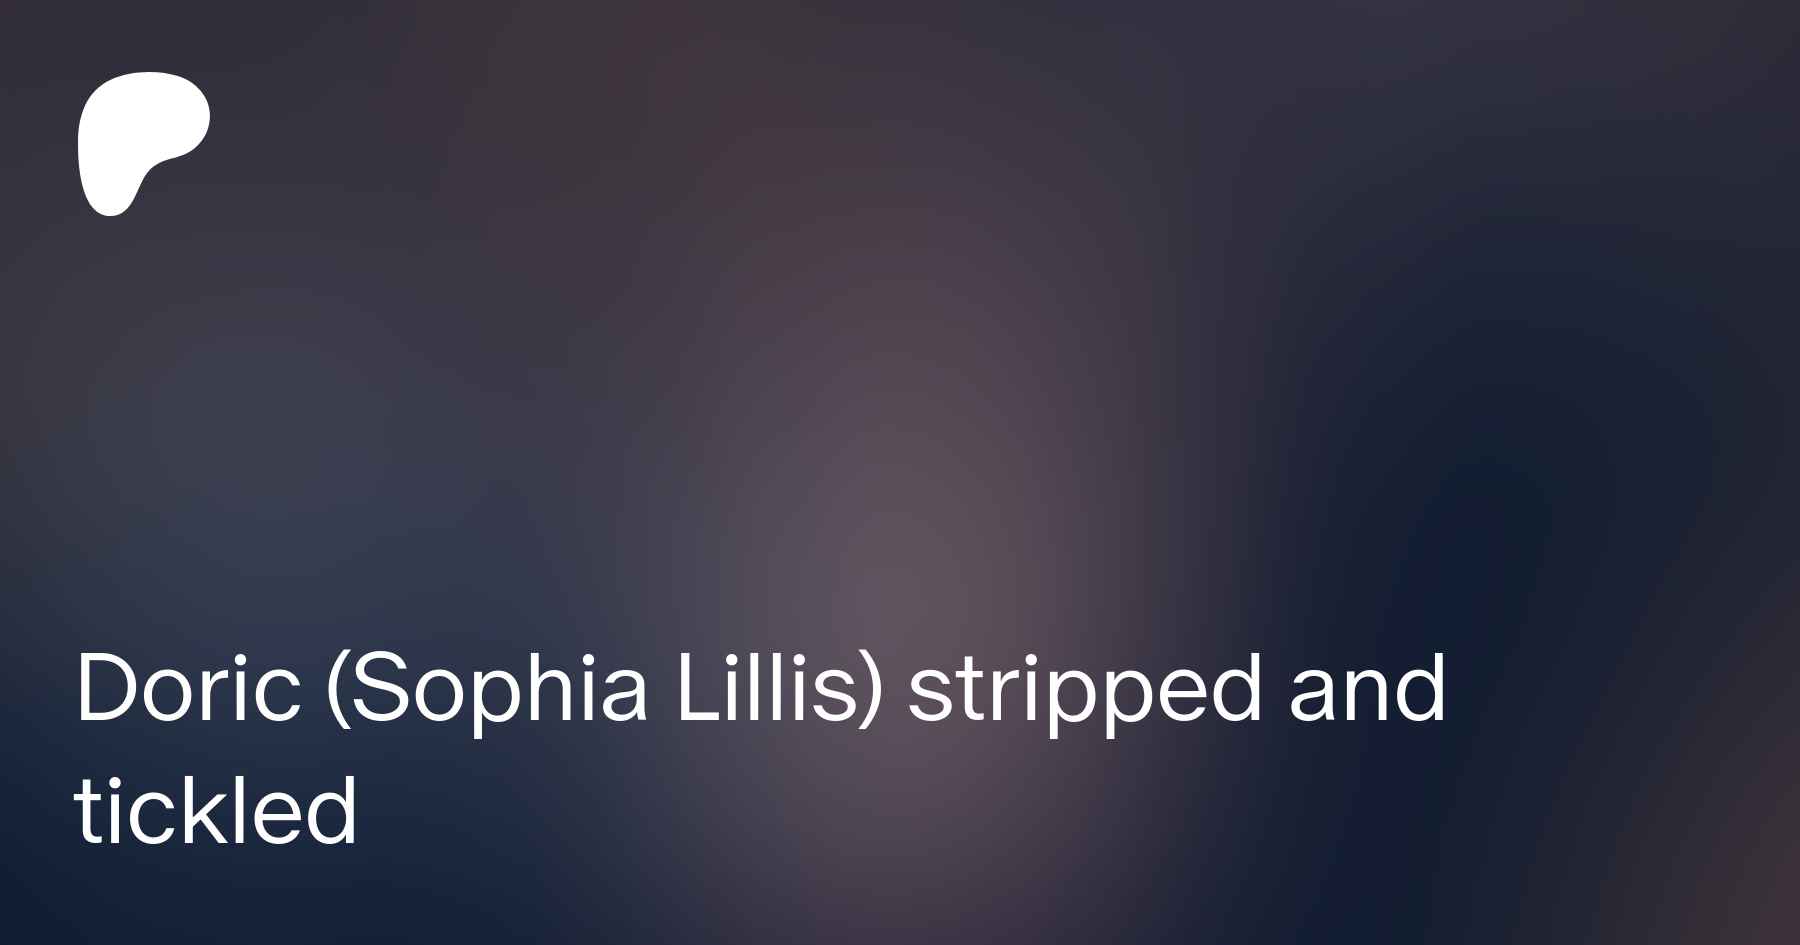 Sophia lillis naked